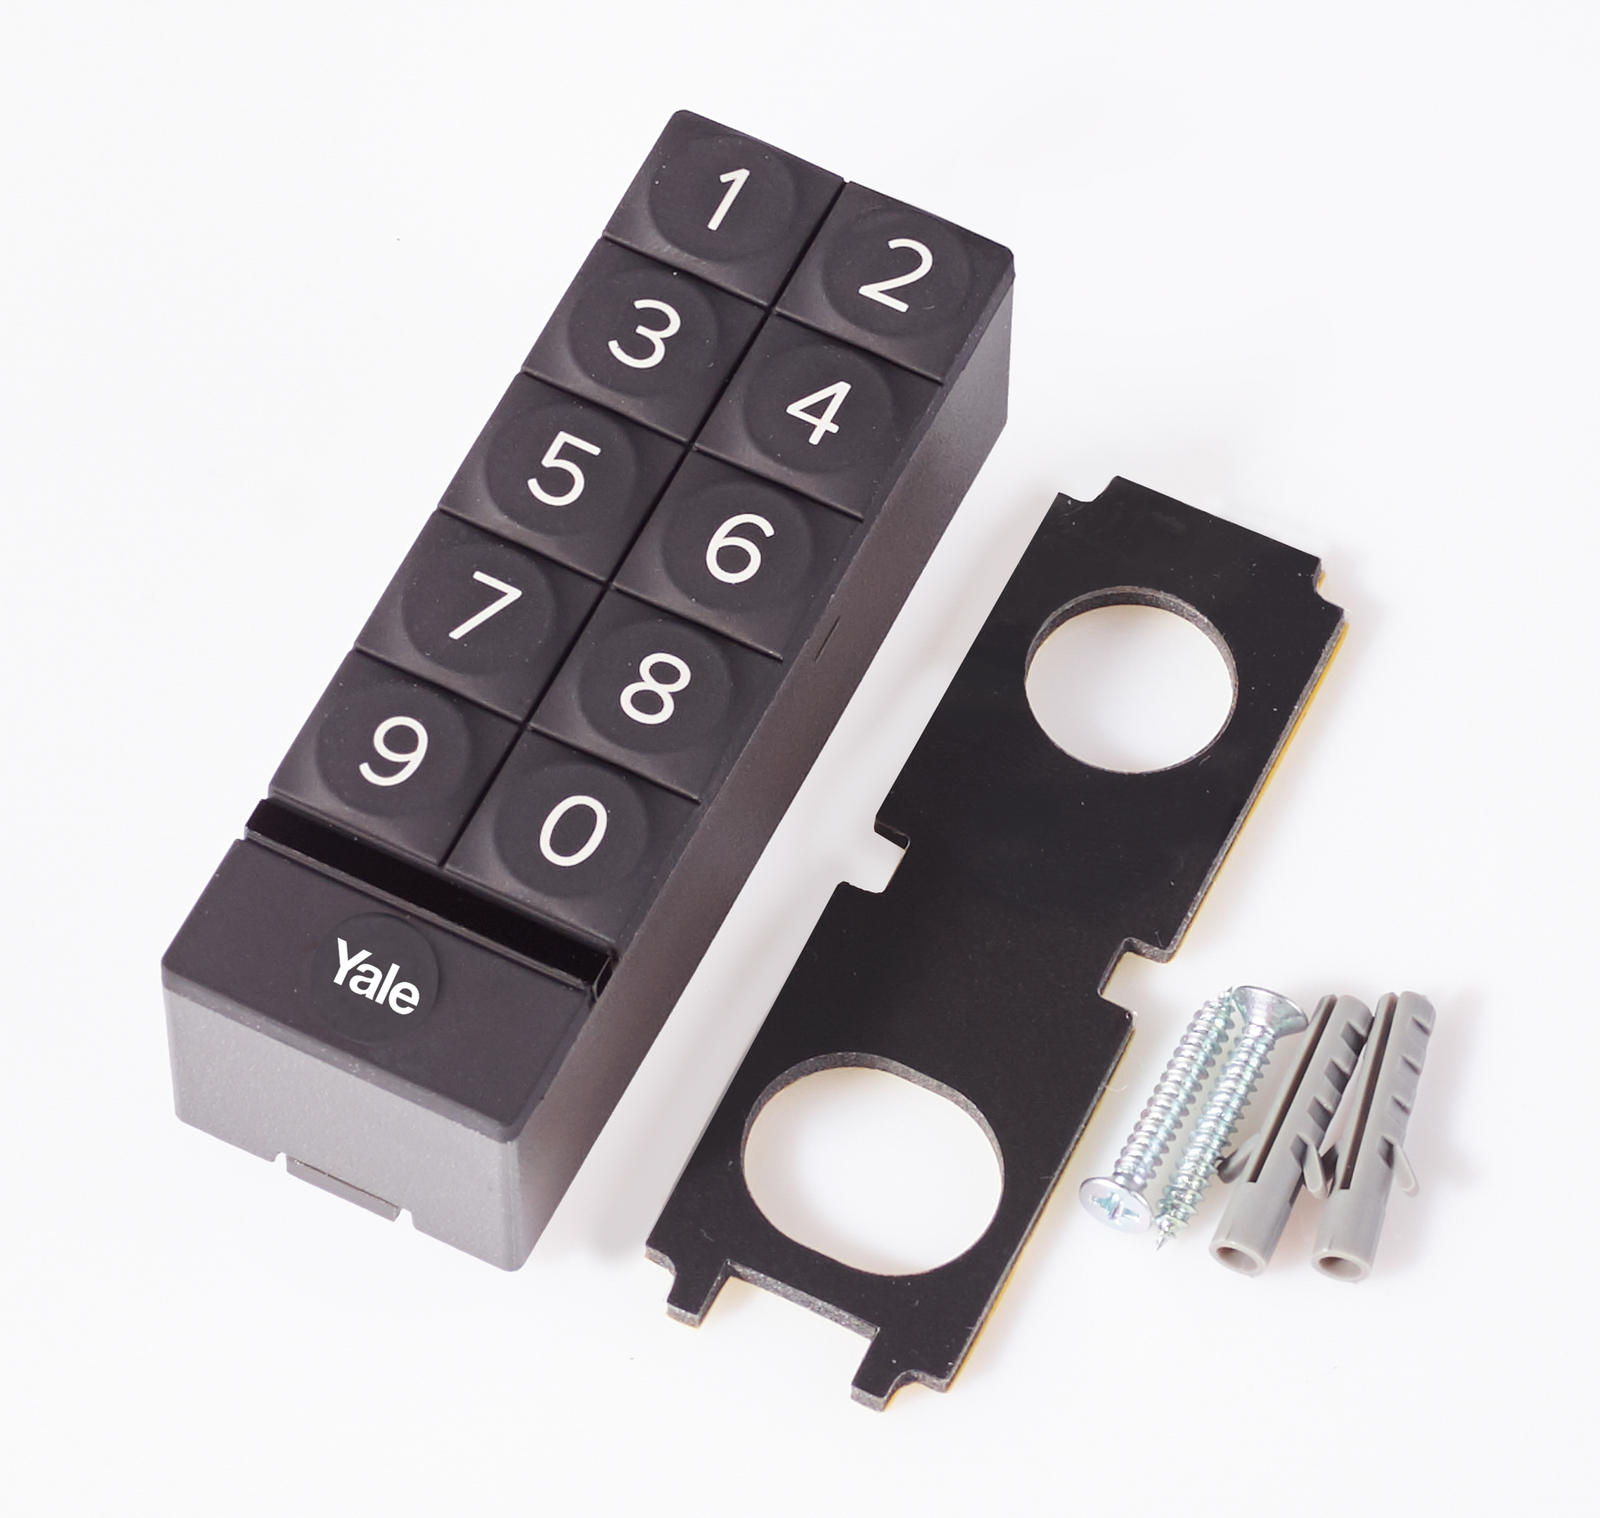 Yale Smart Keypad, Tastenfeld für Zugangscode